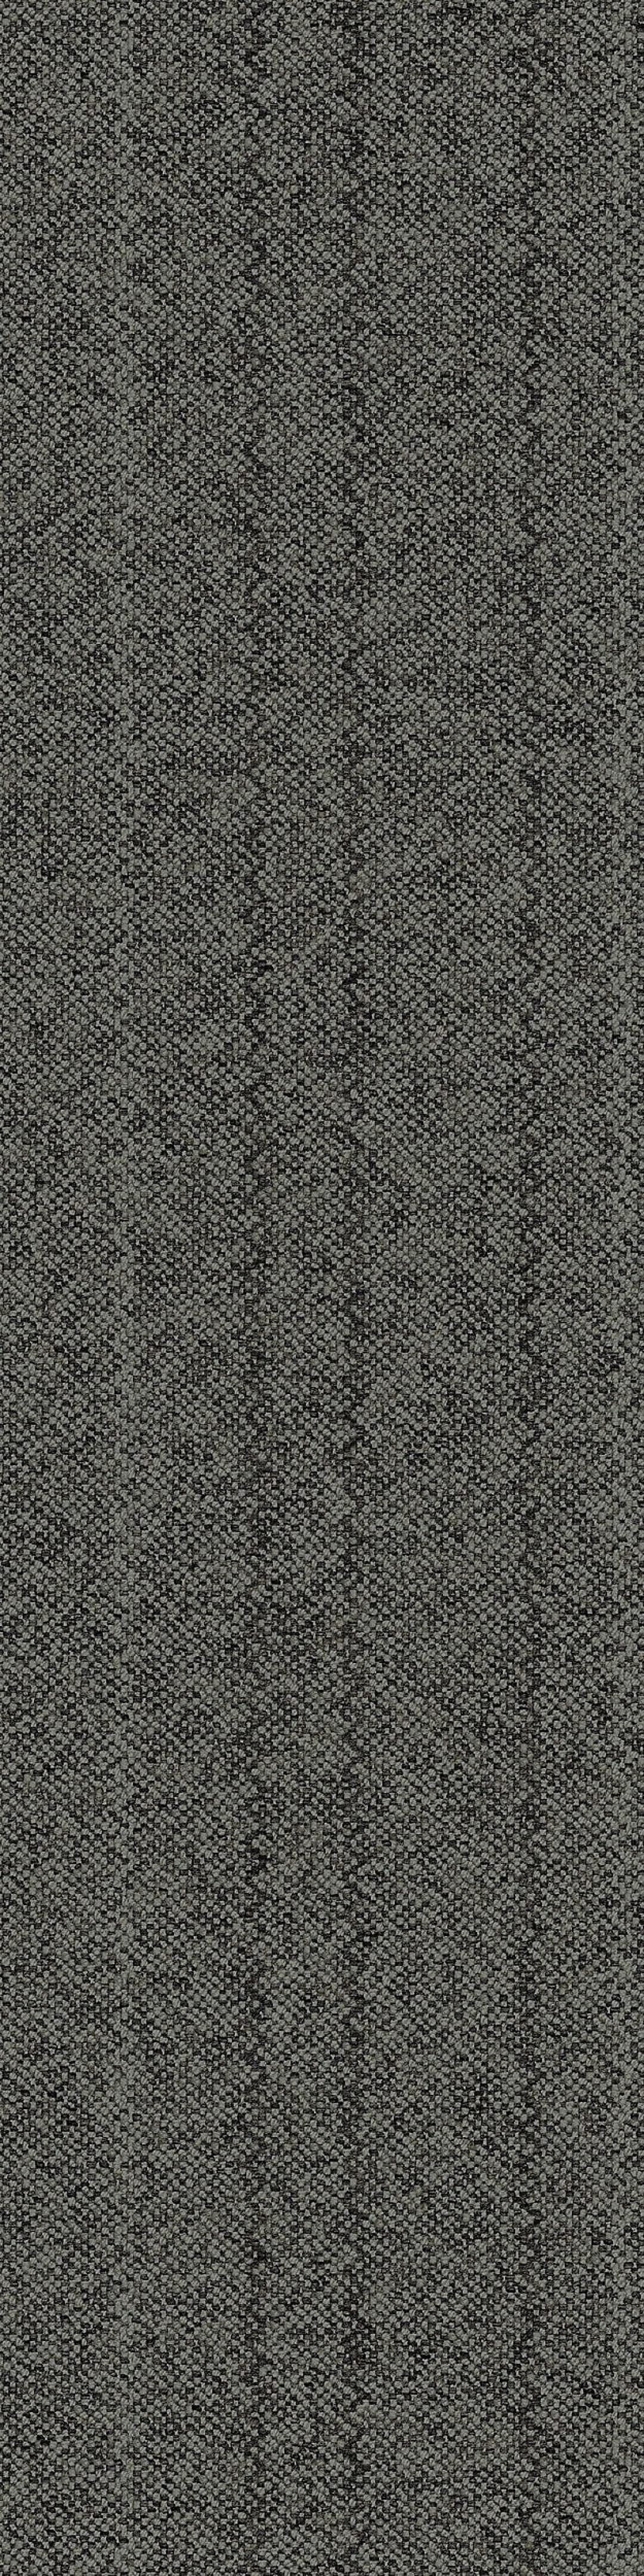 Visual Code - Plain Stitch - Nickel Plain from Inzide